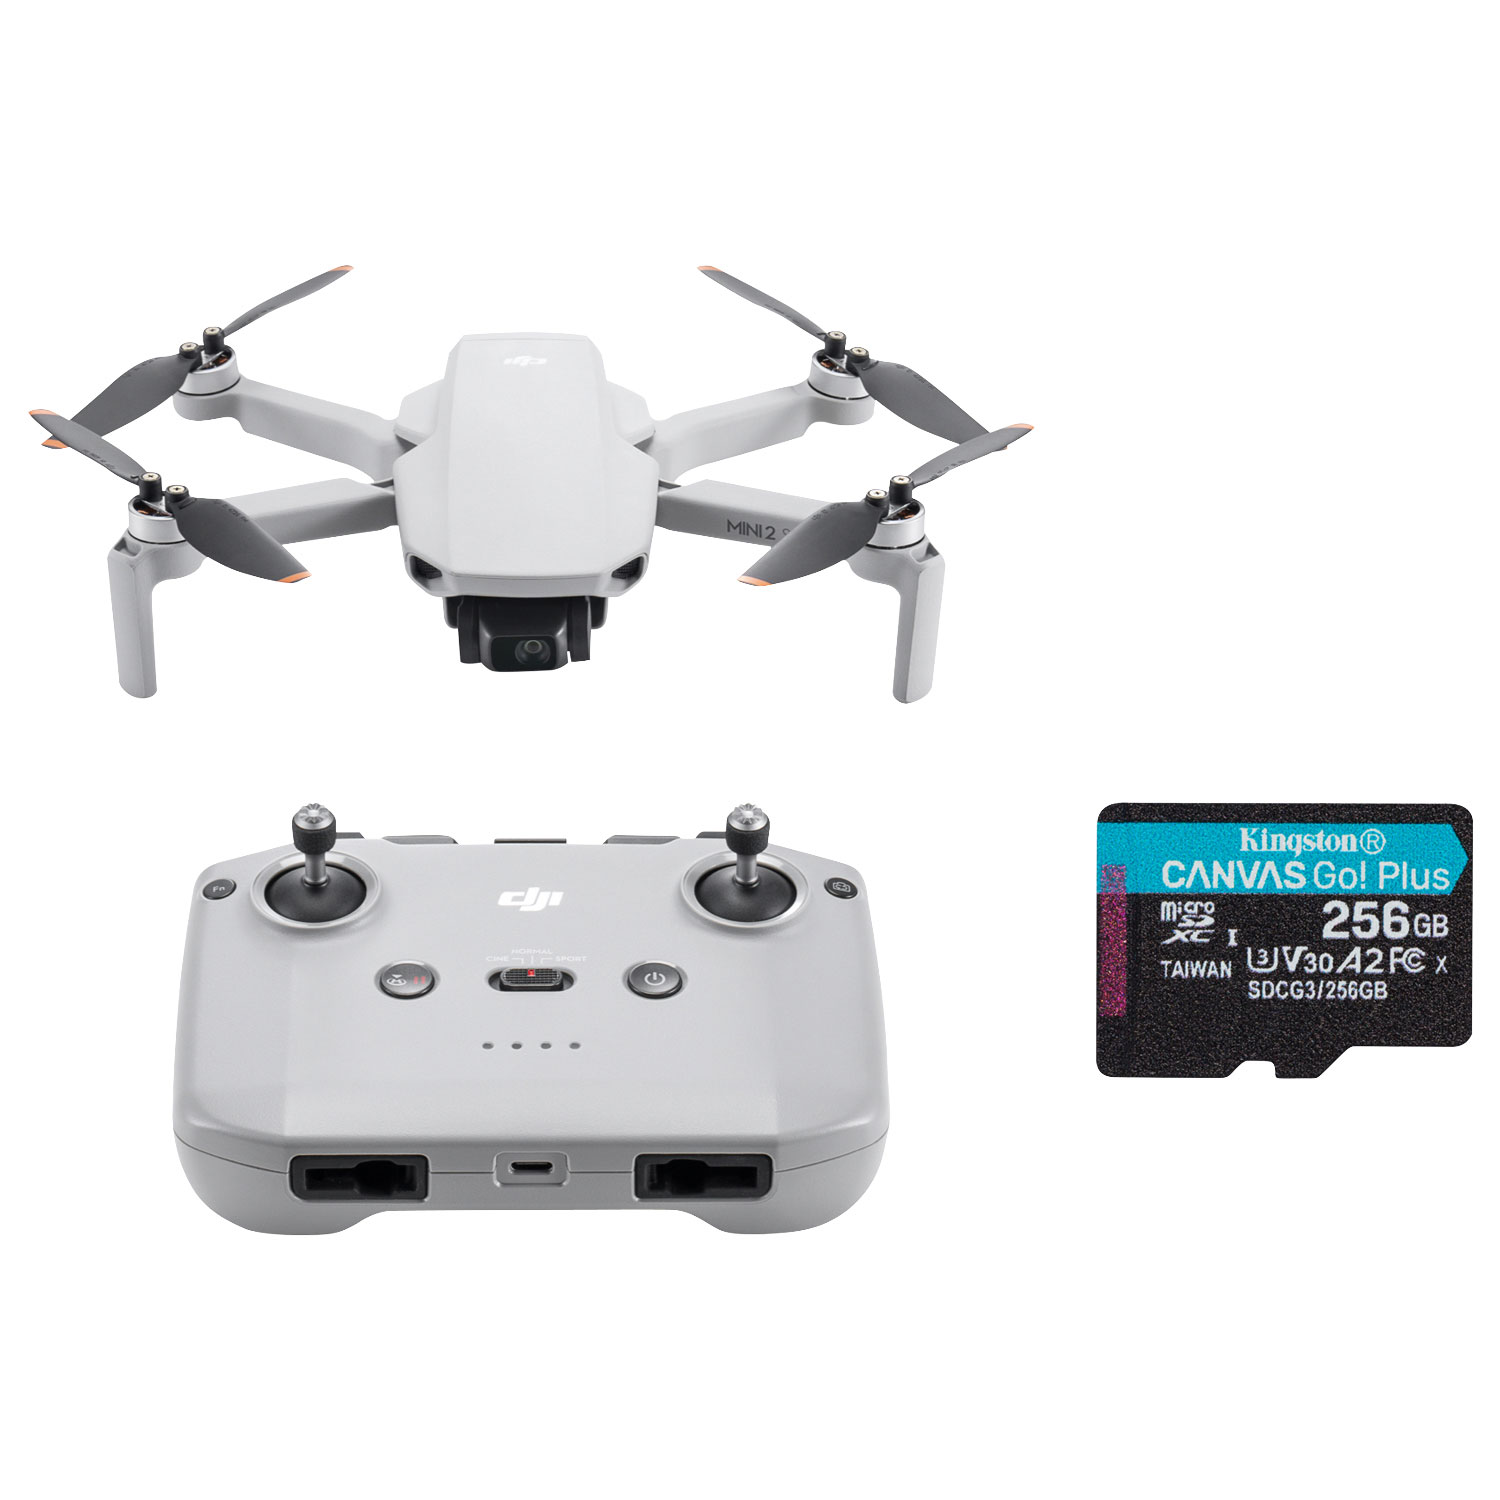 DJI Mini 2 SE Quadcopter Drone with Remote Control & 256GB 170MB/s microSDXC Memory Card - Grey